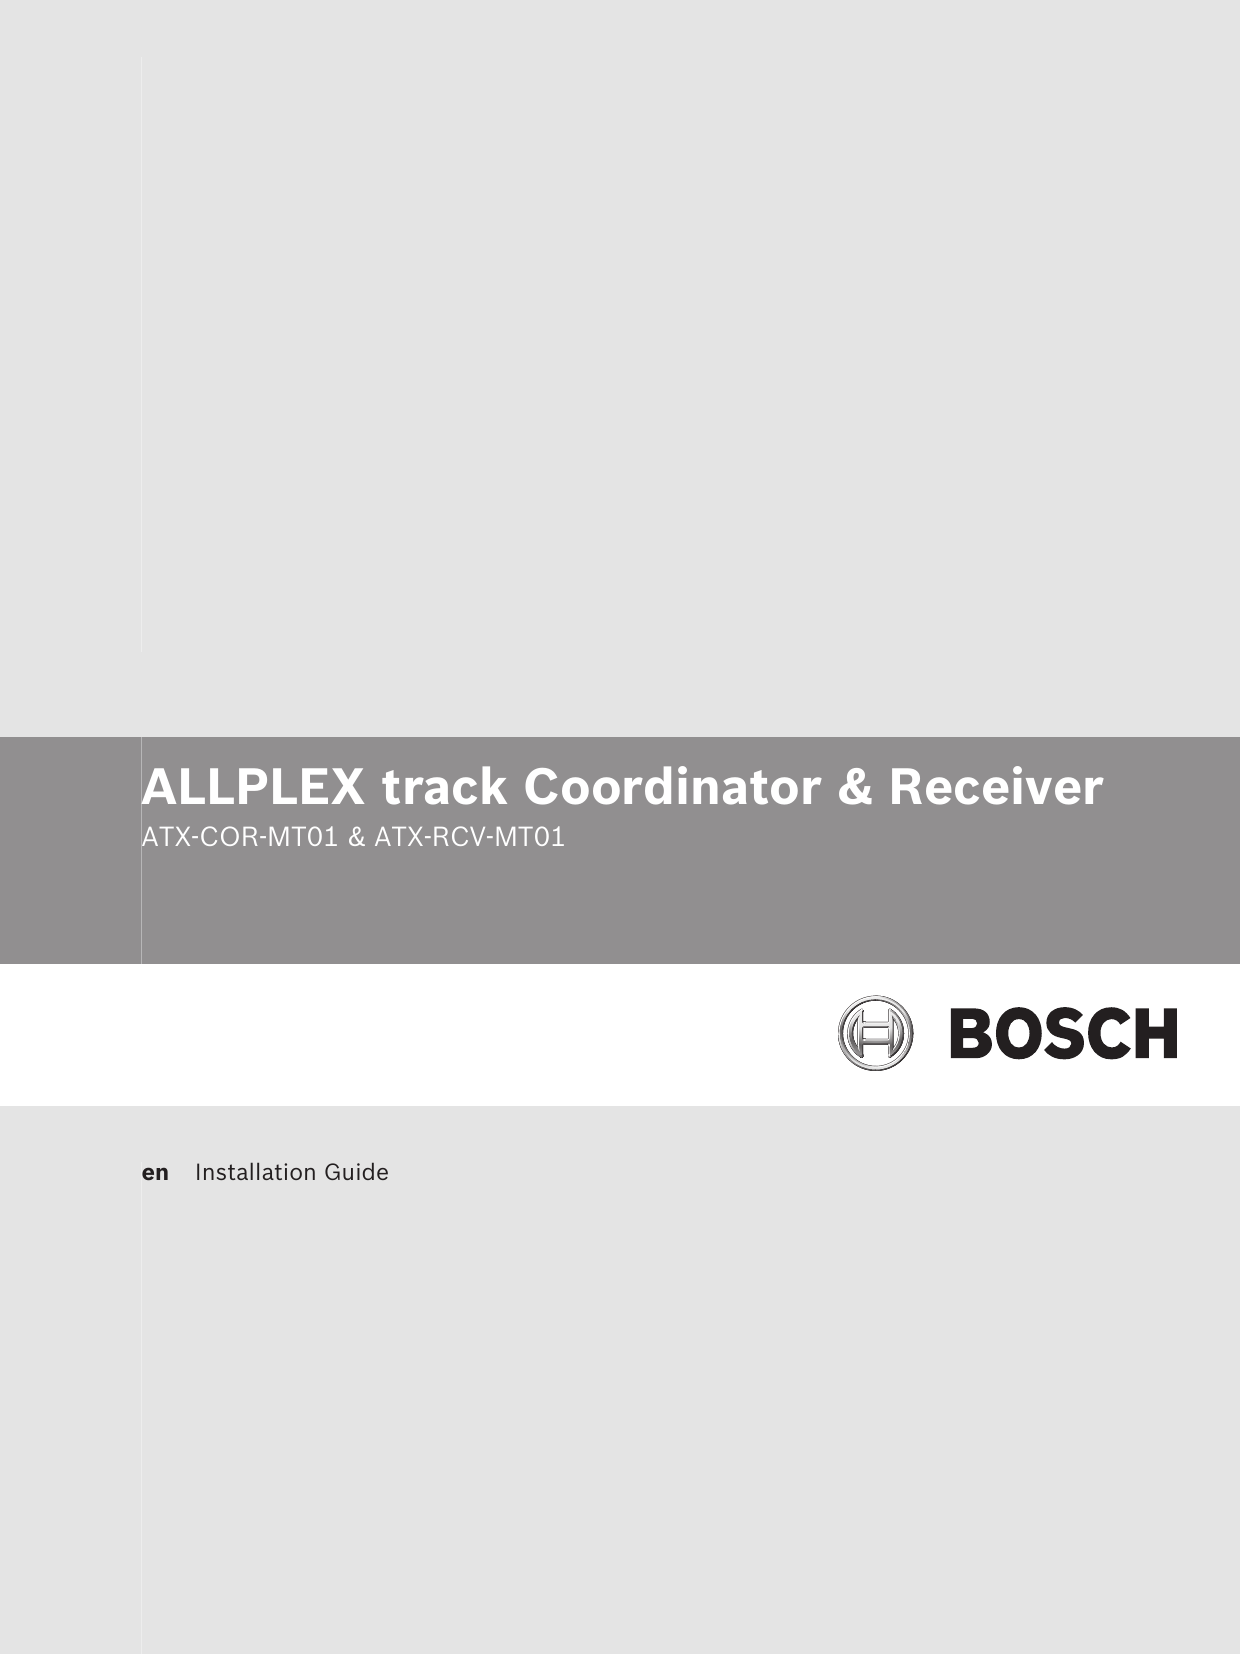         ALLPLEX track Coordinator &amp; ReceiverATX-COR-MT01 &amp; ATX-RCV-MT01  en Installation Guide  